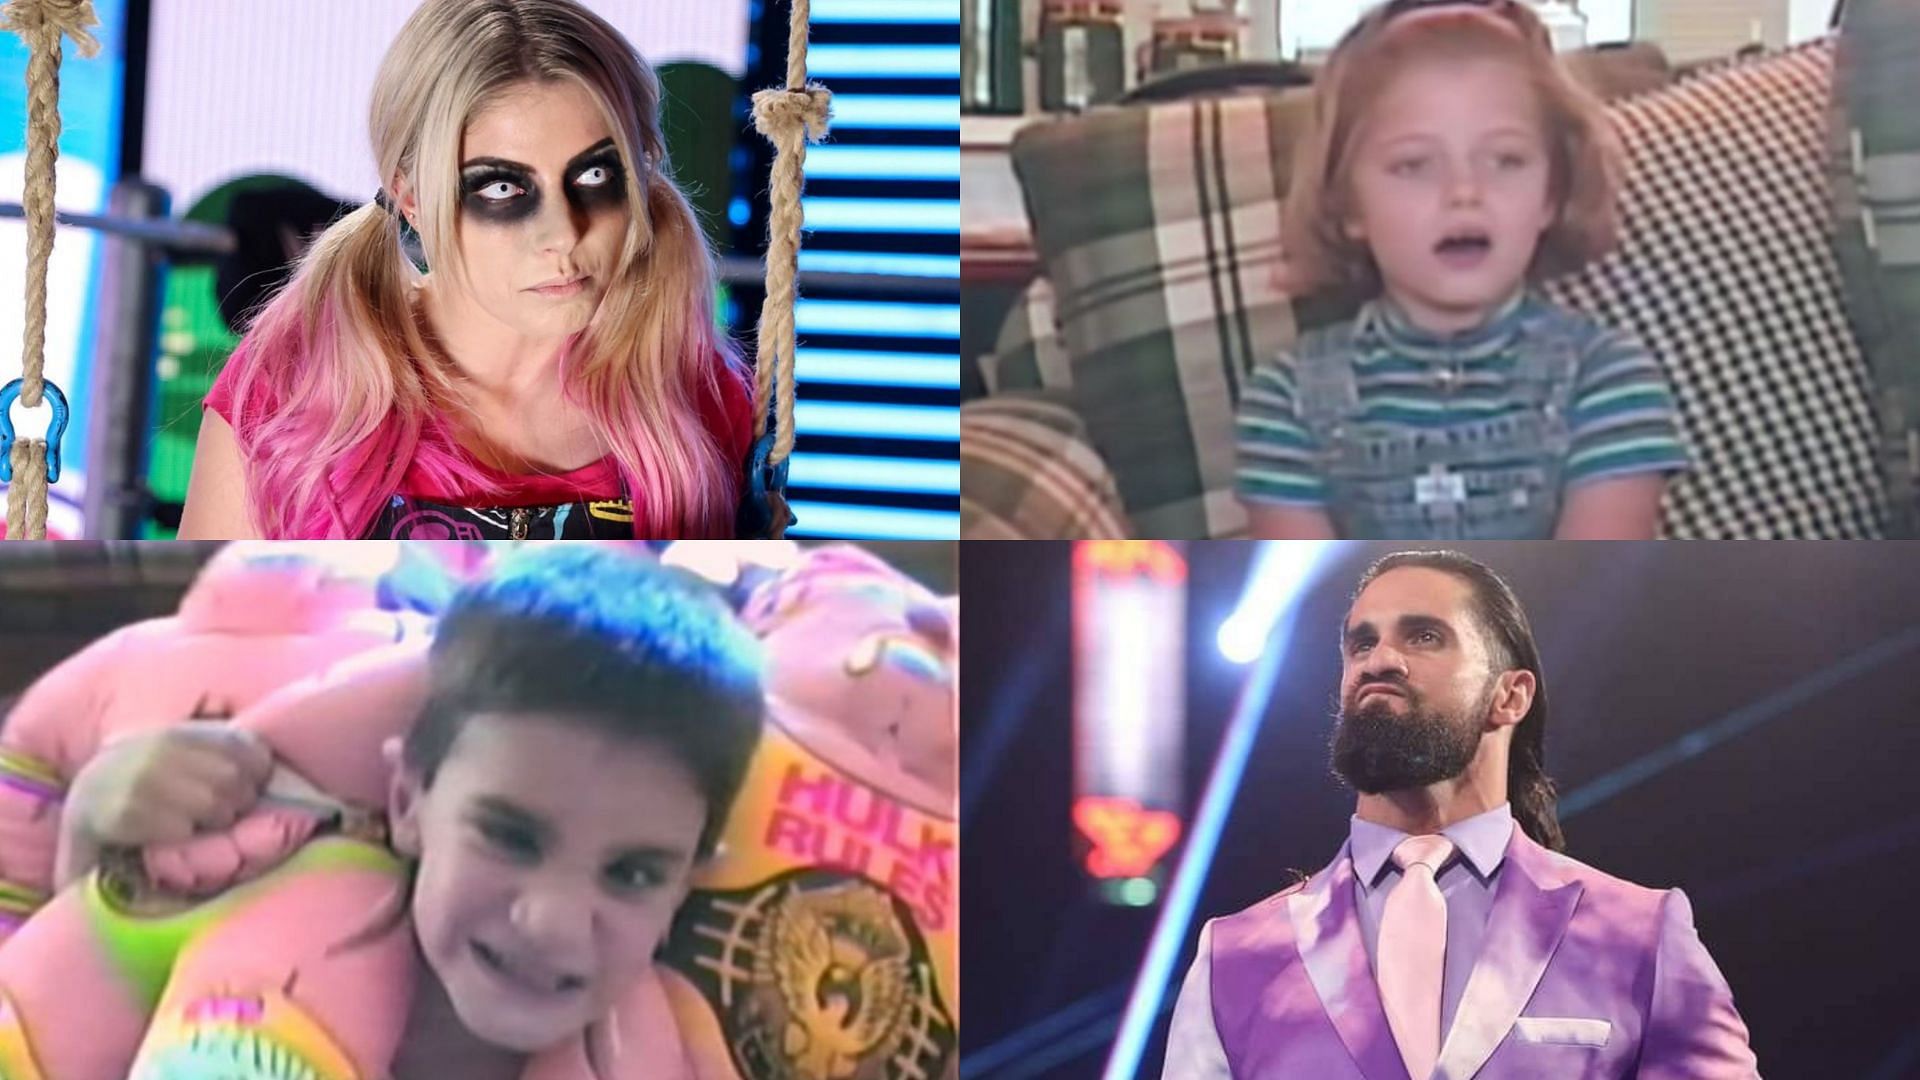 WWE Superstars Alexa Bliss and Seth Rollins